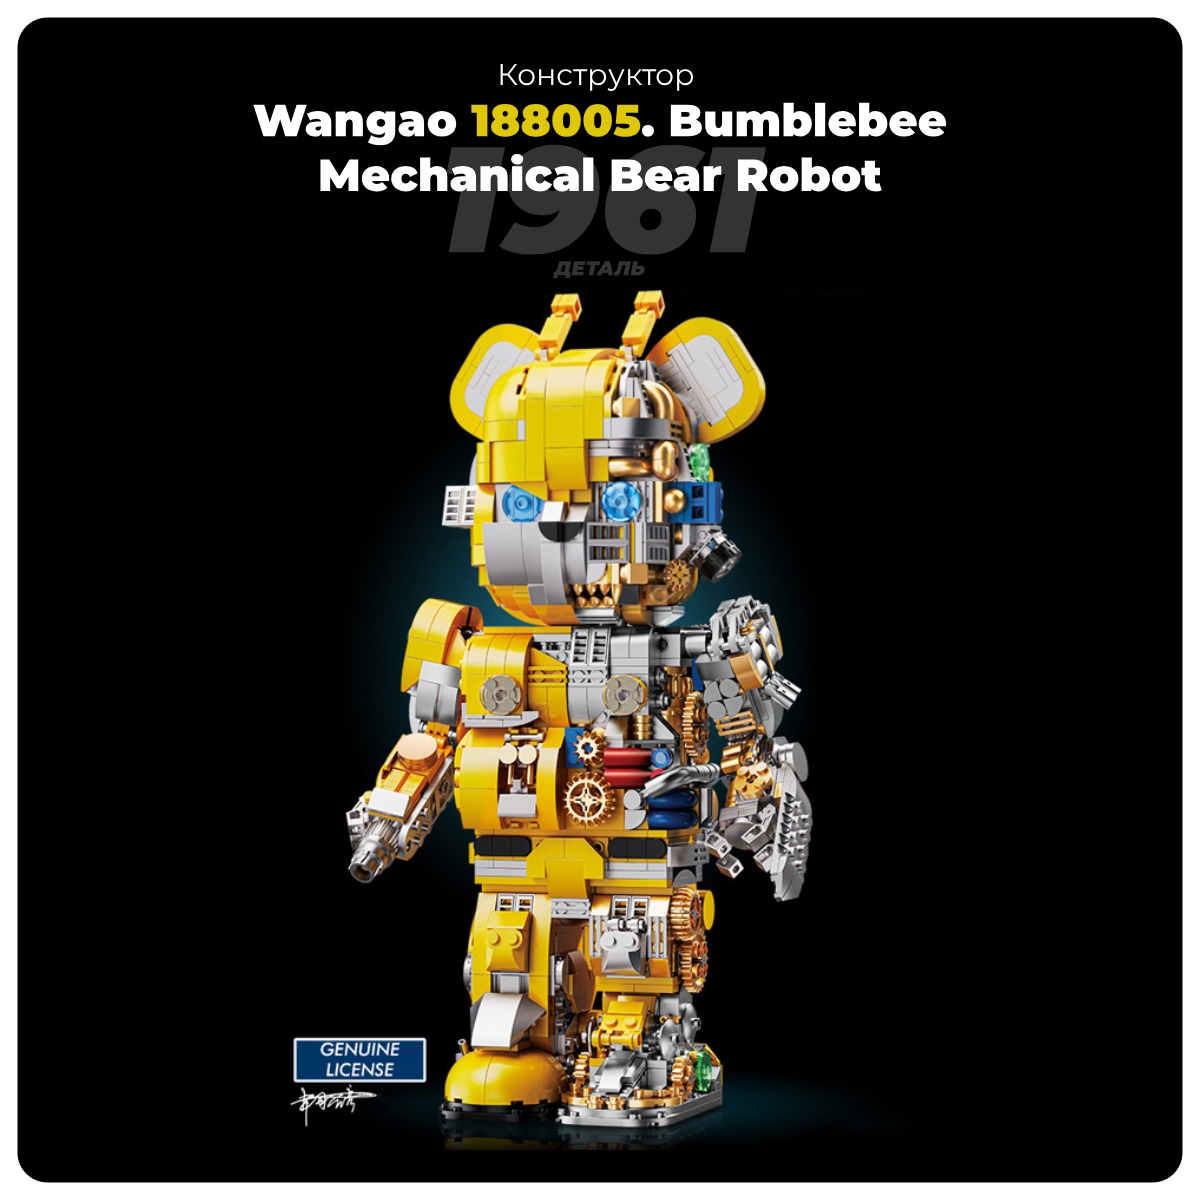 Wangao-188005-Bumblebee-Mechanical-Bear-Robot-01